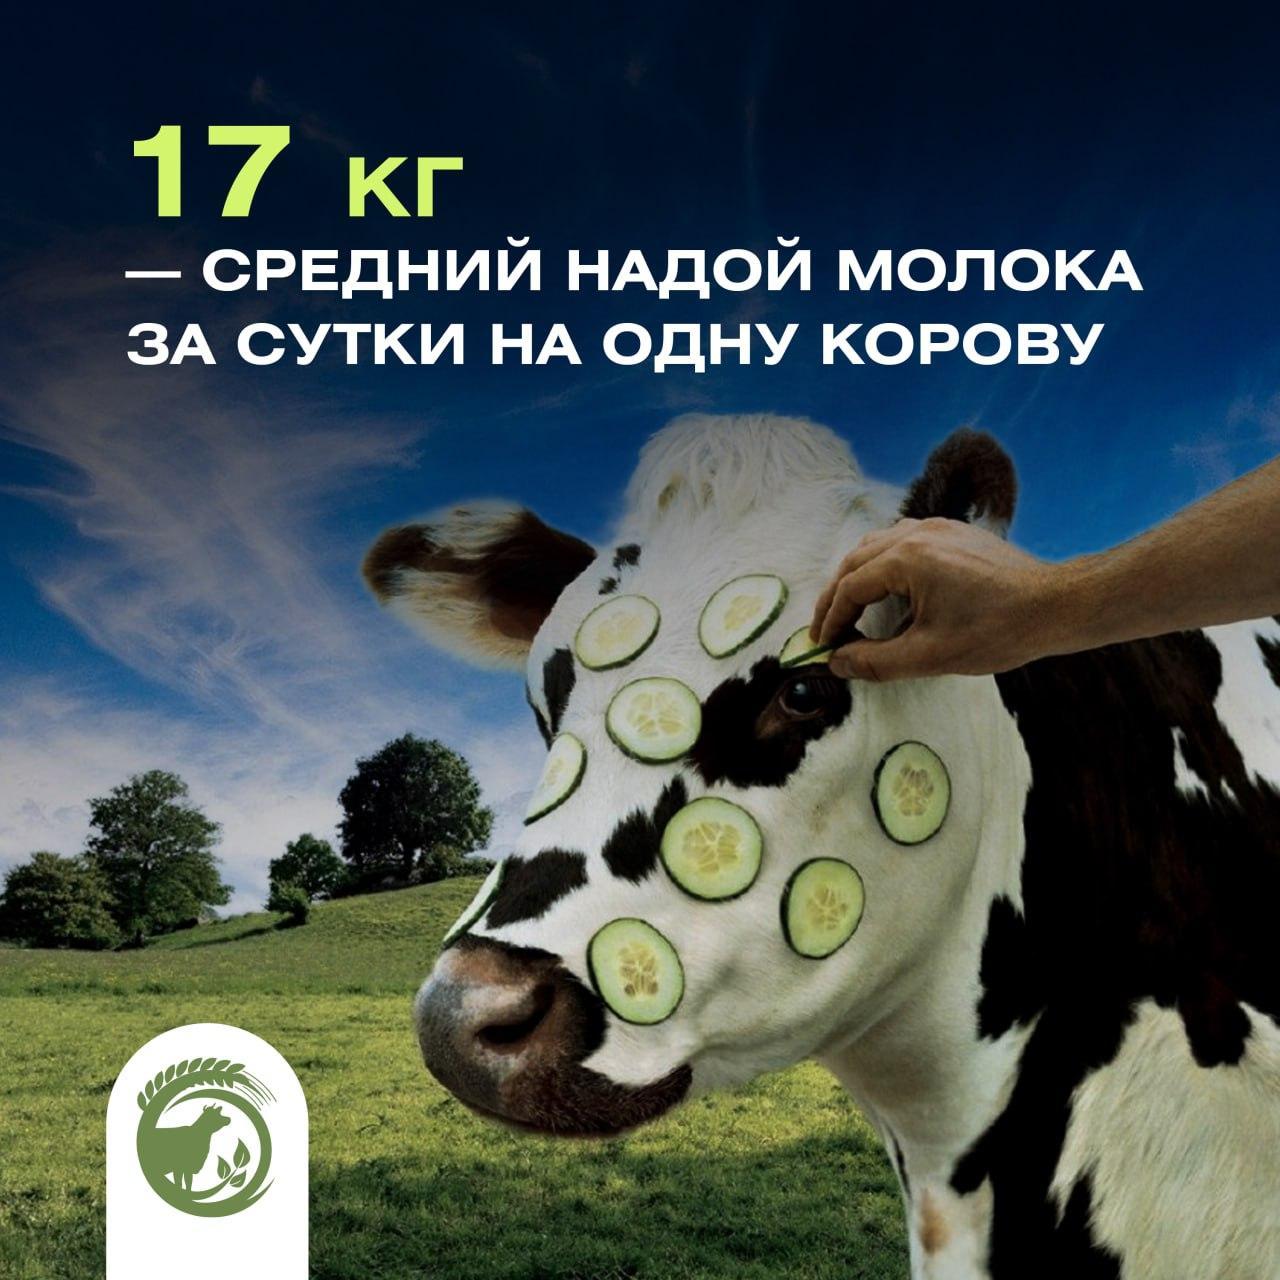 Средний надой молока за сутки на одну корову составил 17 кг.